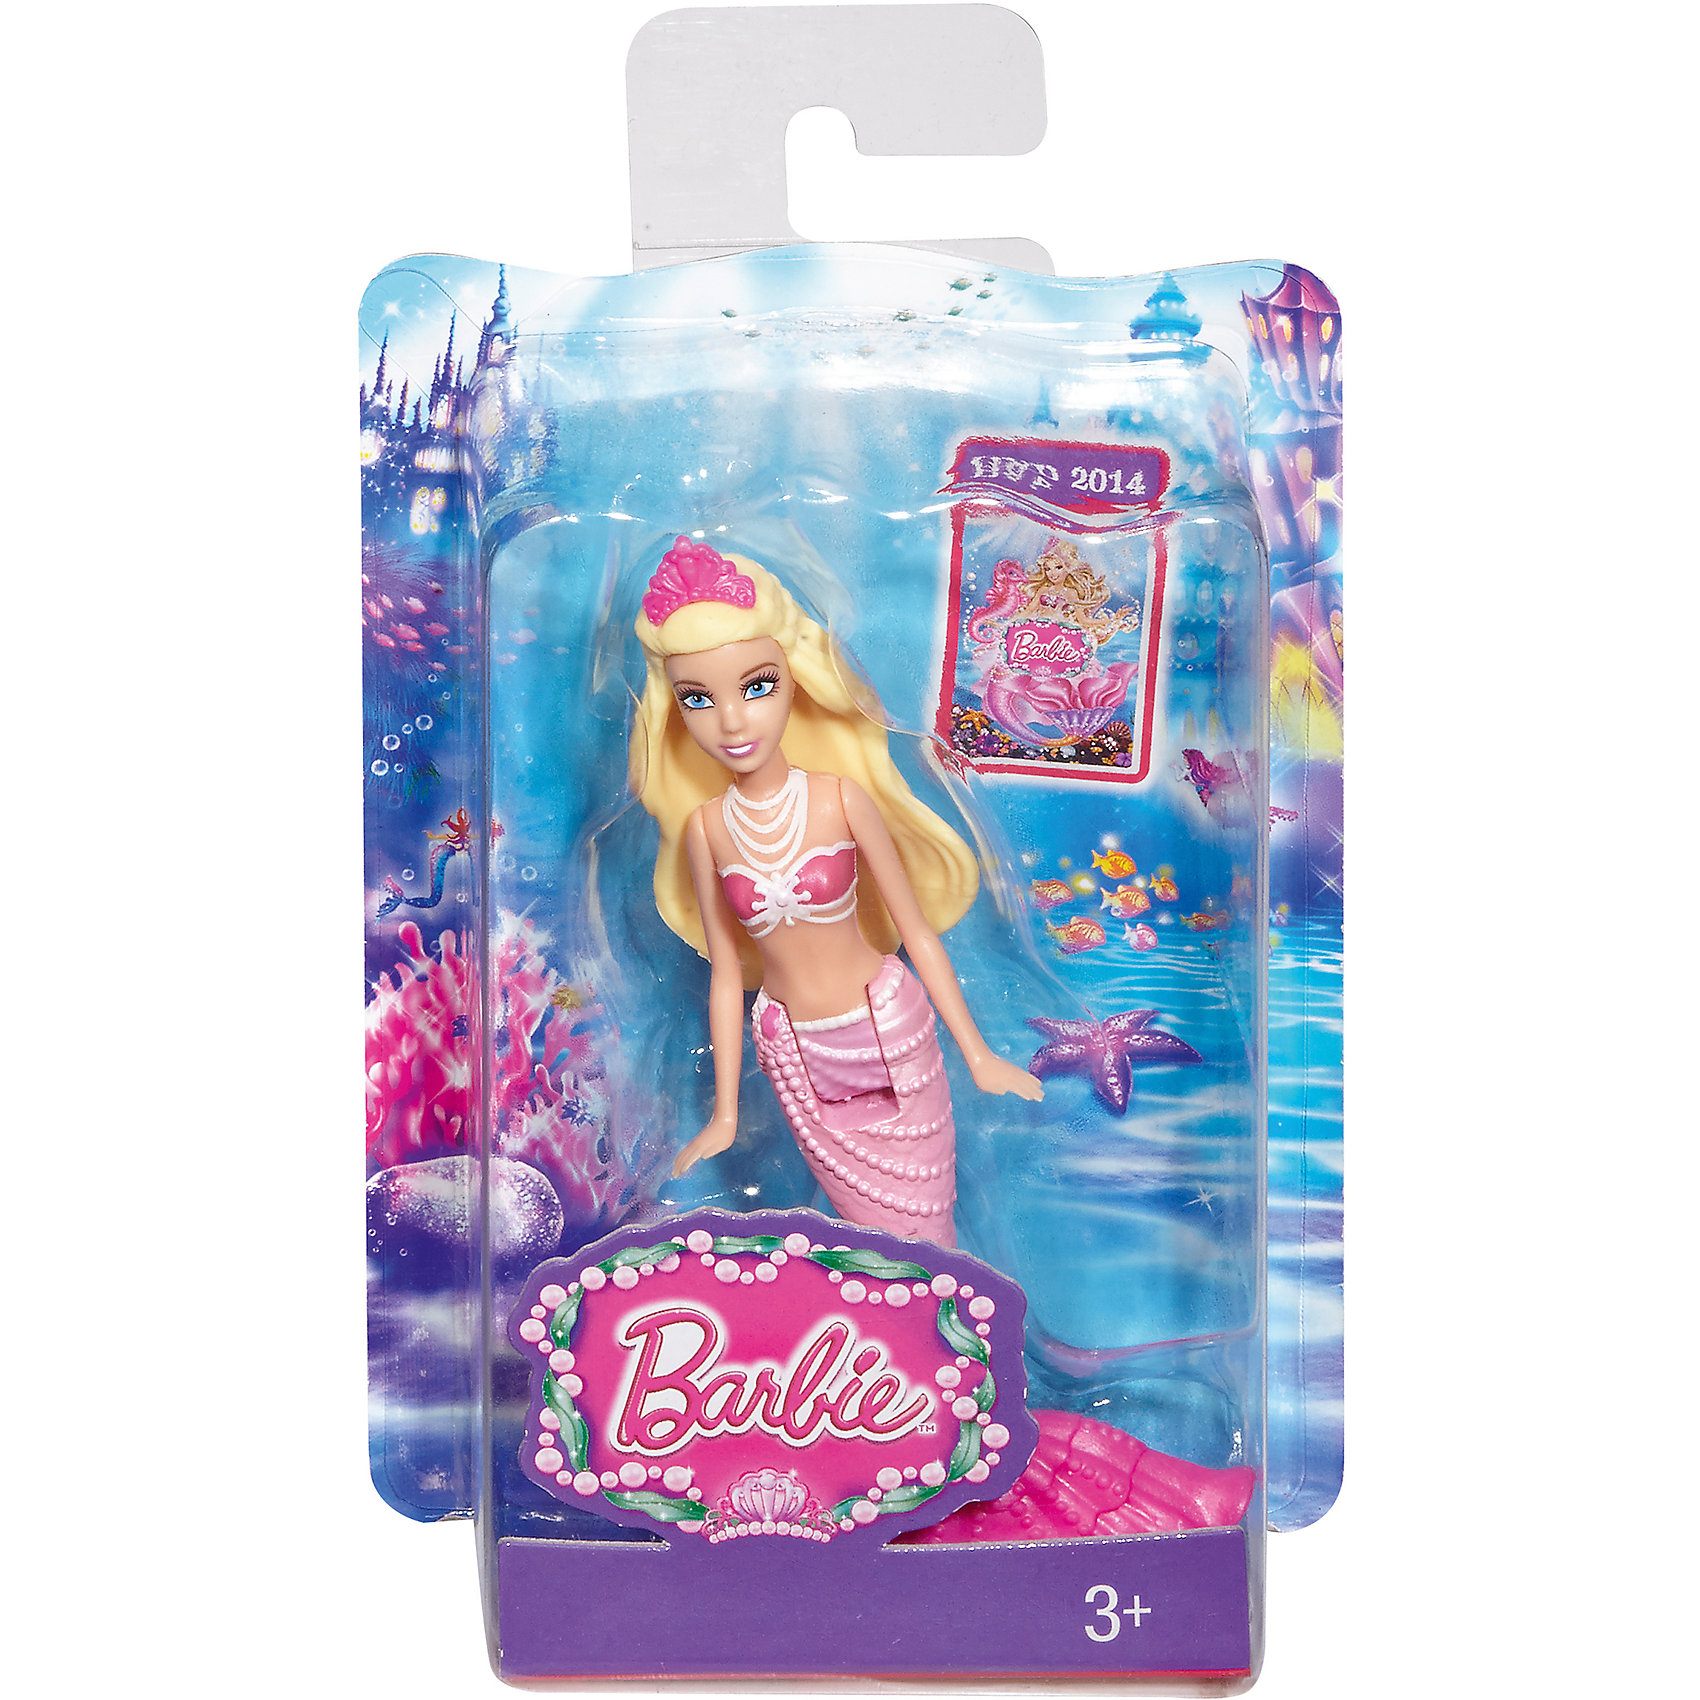 Мини куклы барби. Mattel Barbie мини-кукла. Mattel Экстра мини кукла Барби 5. Кукла Барби Русалка. Кукла Барби в тубусе.